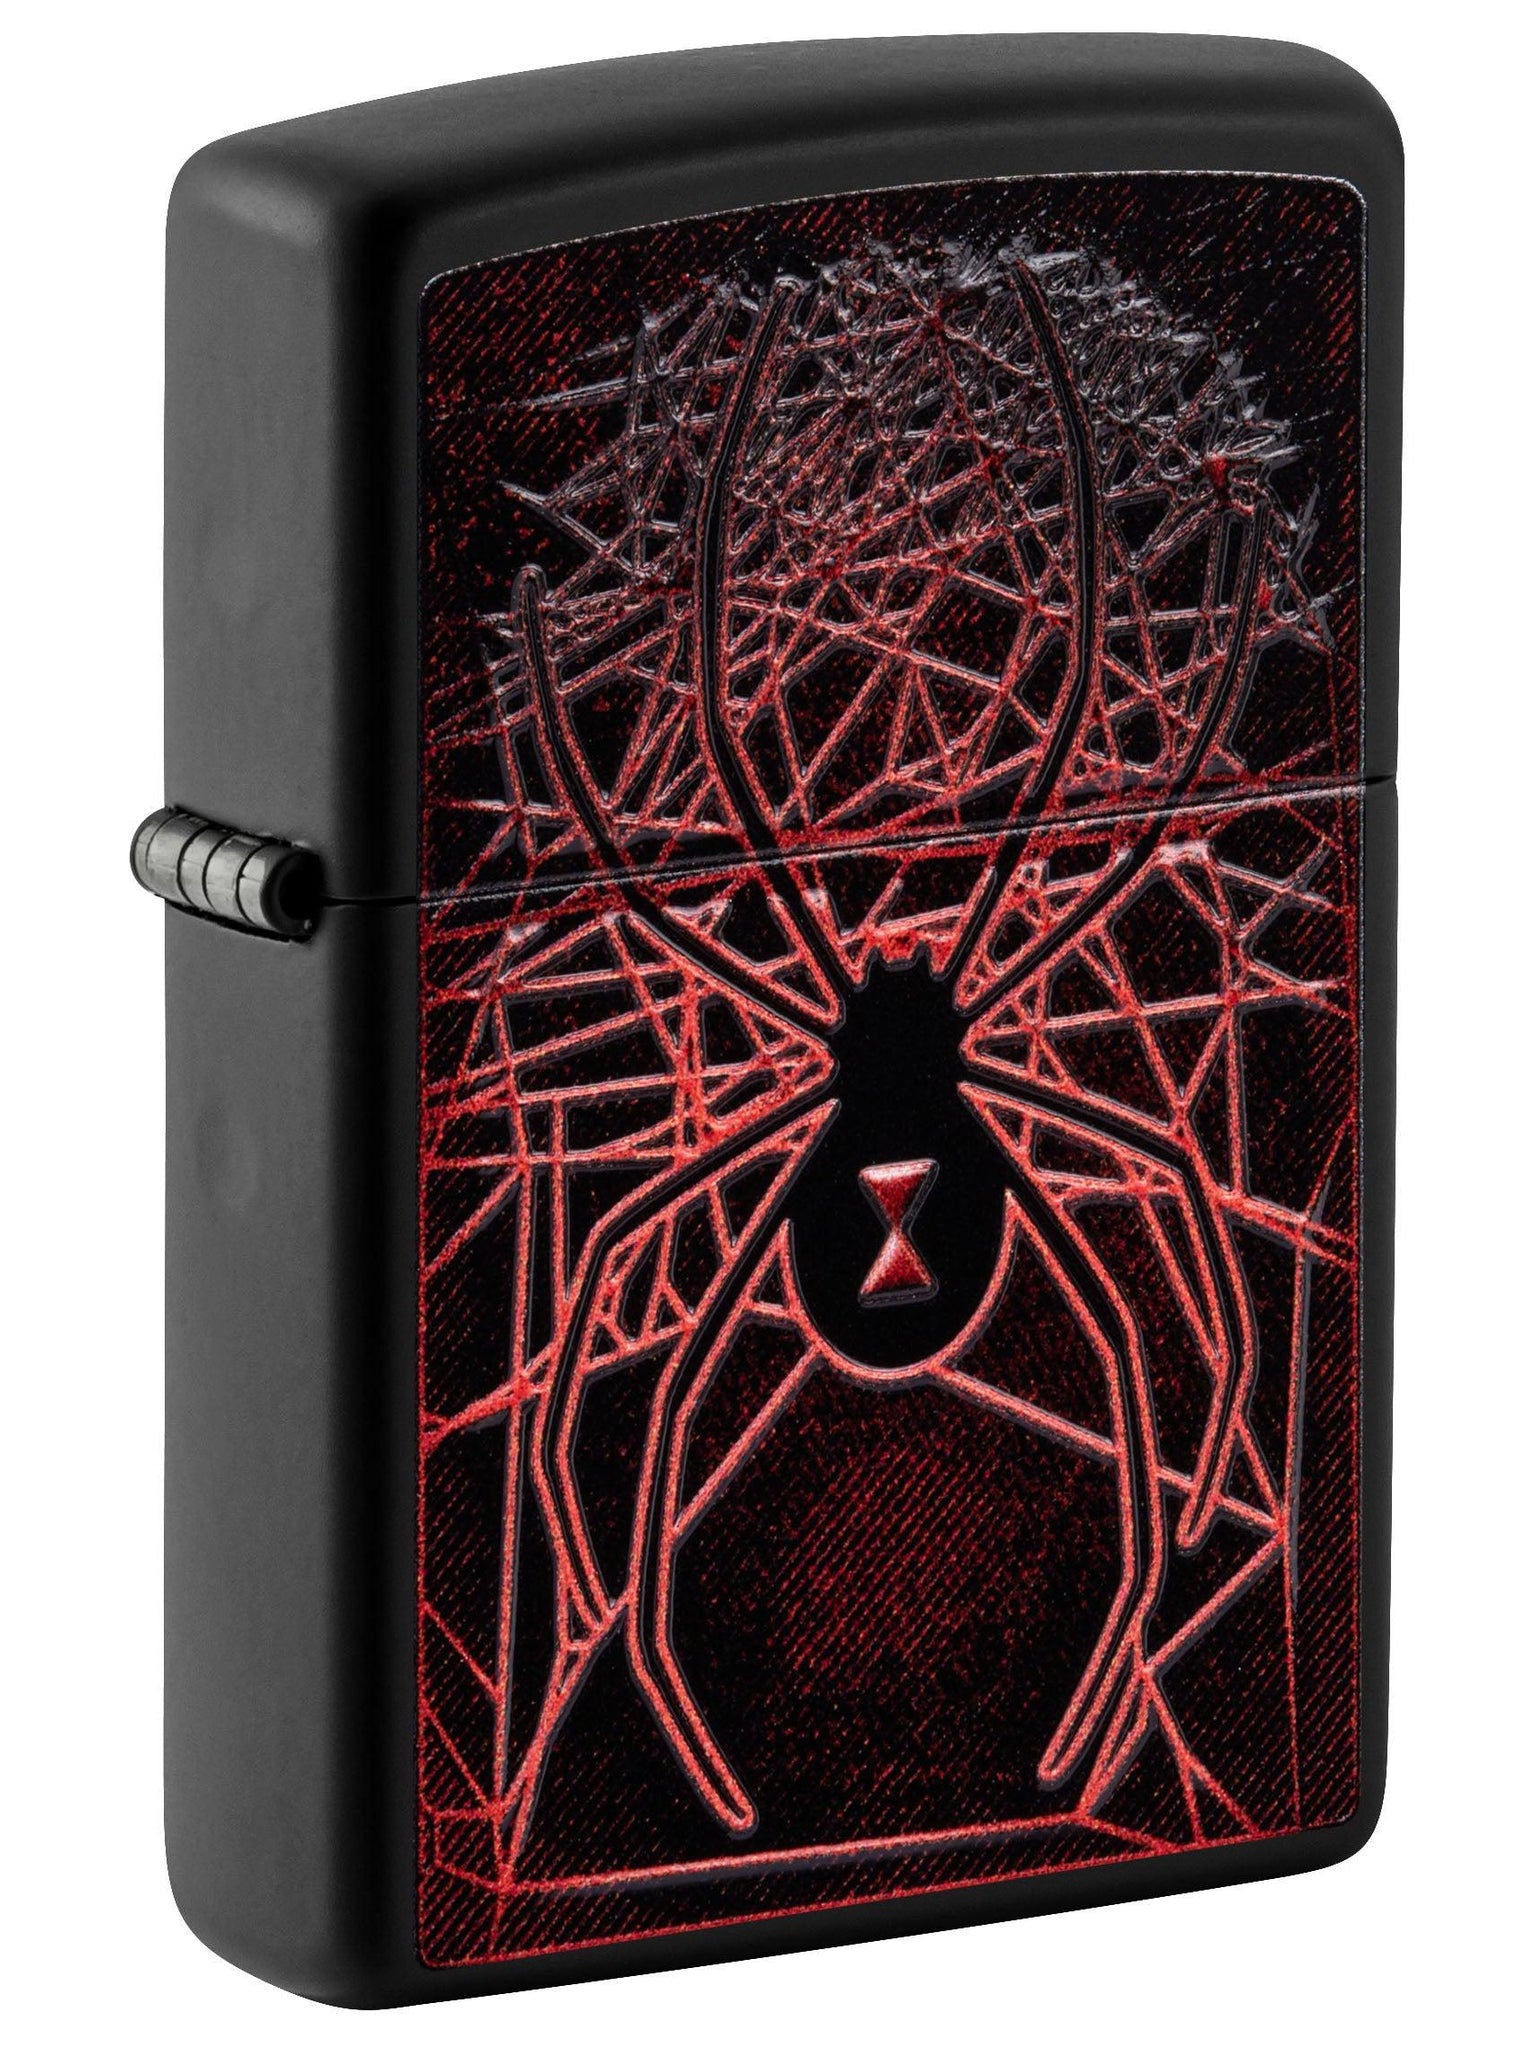 Zippo Lighter: Black Widow Spider, Texture Print - Black Matte 49791